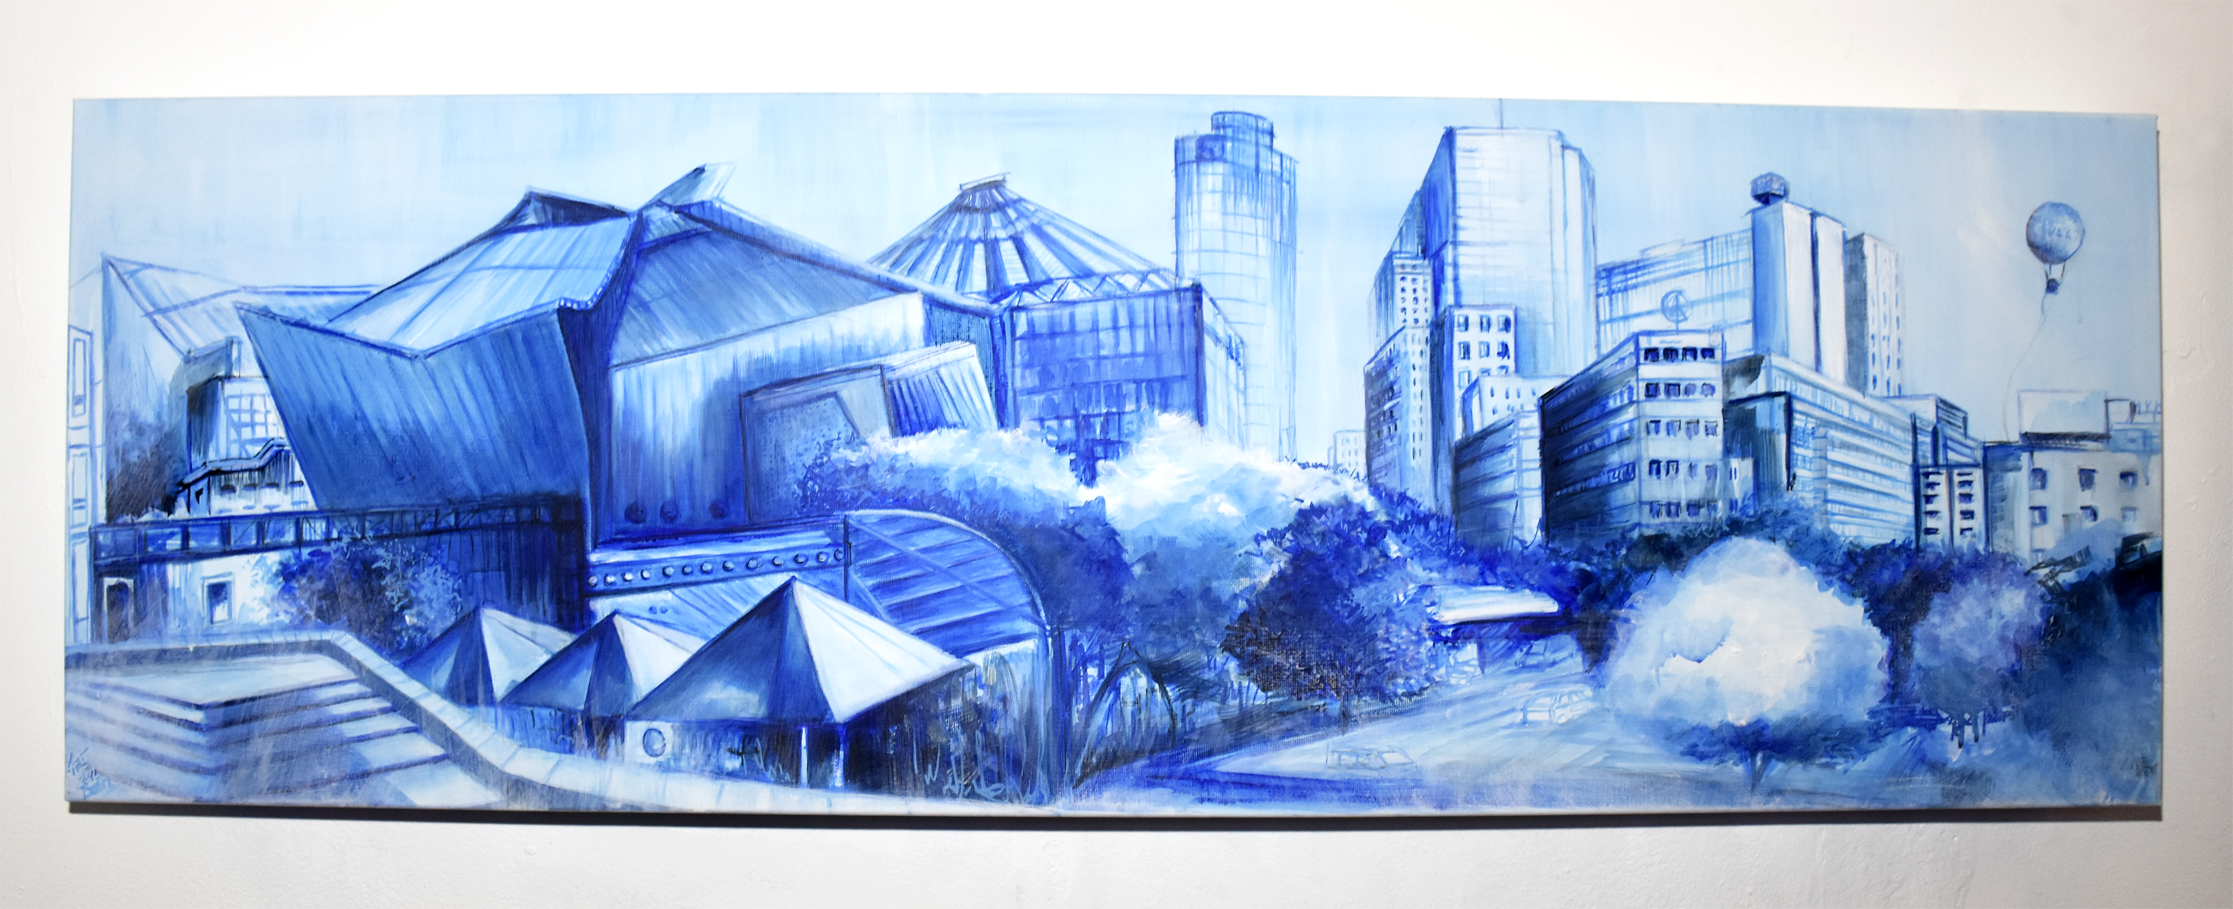 Painting Potsdamer Platz, Philharmonie Berlin- Serie Berlin Blue, 40x120 cm  -03.2022